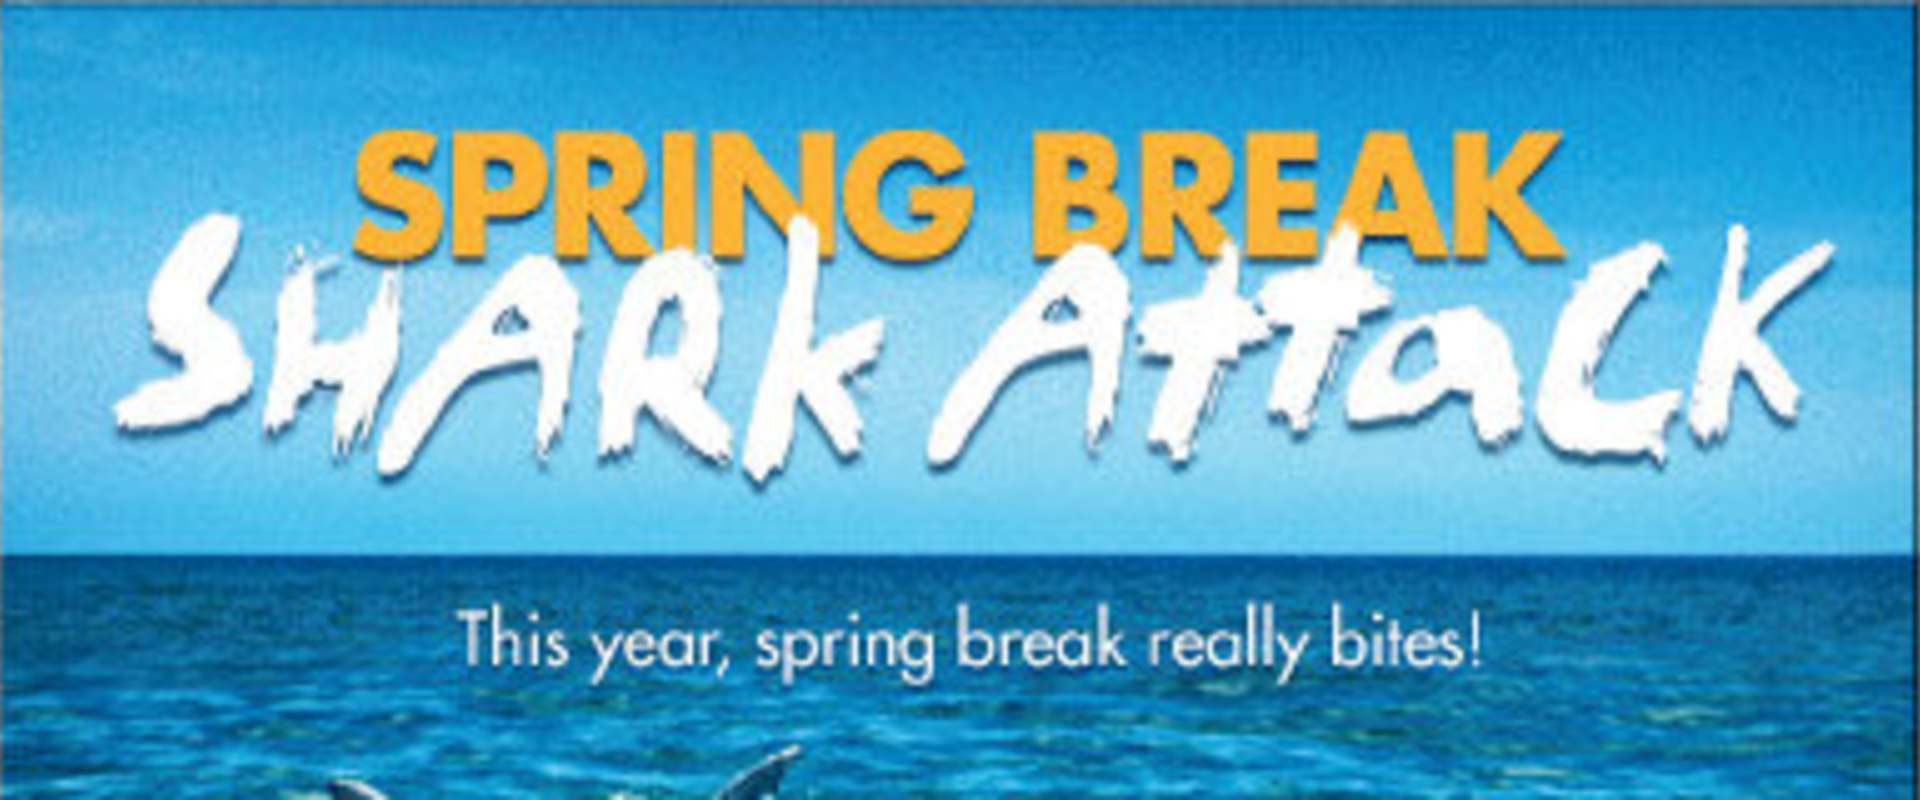 Spring Break Shark Attack background 1